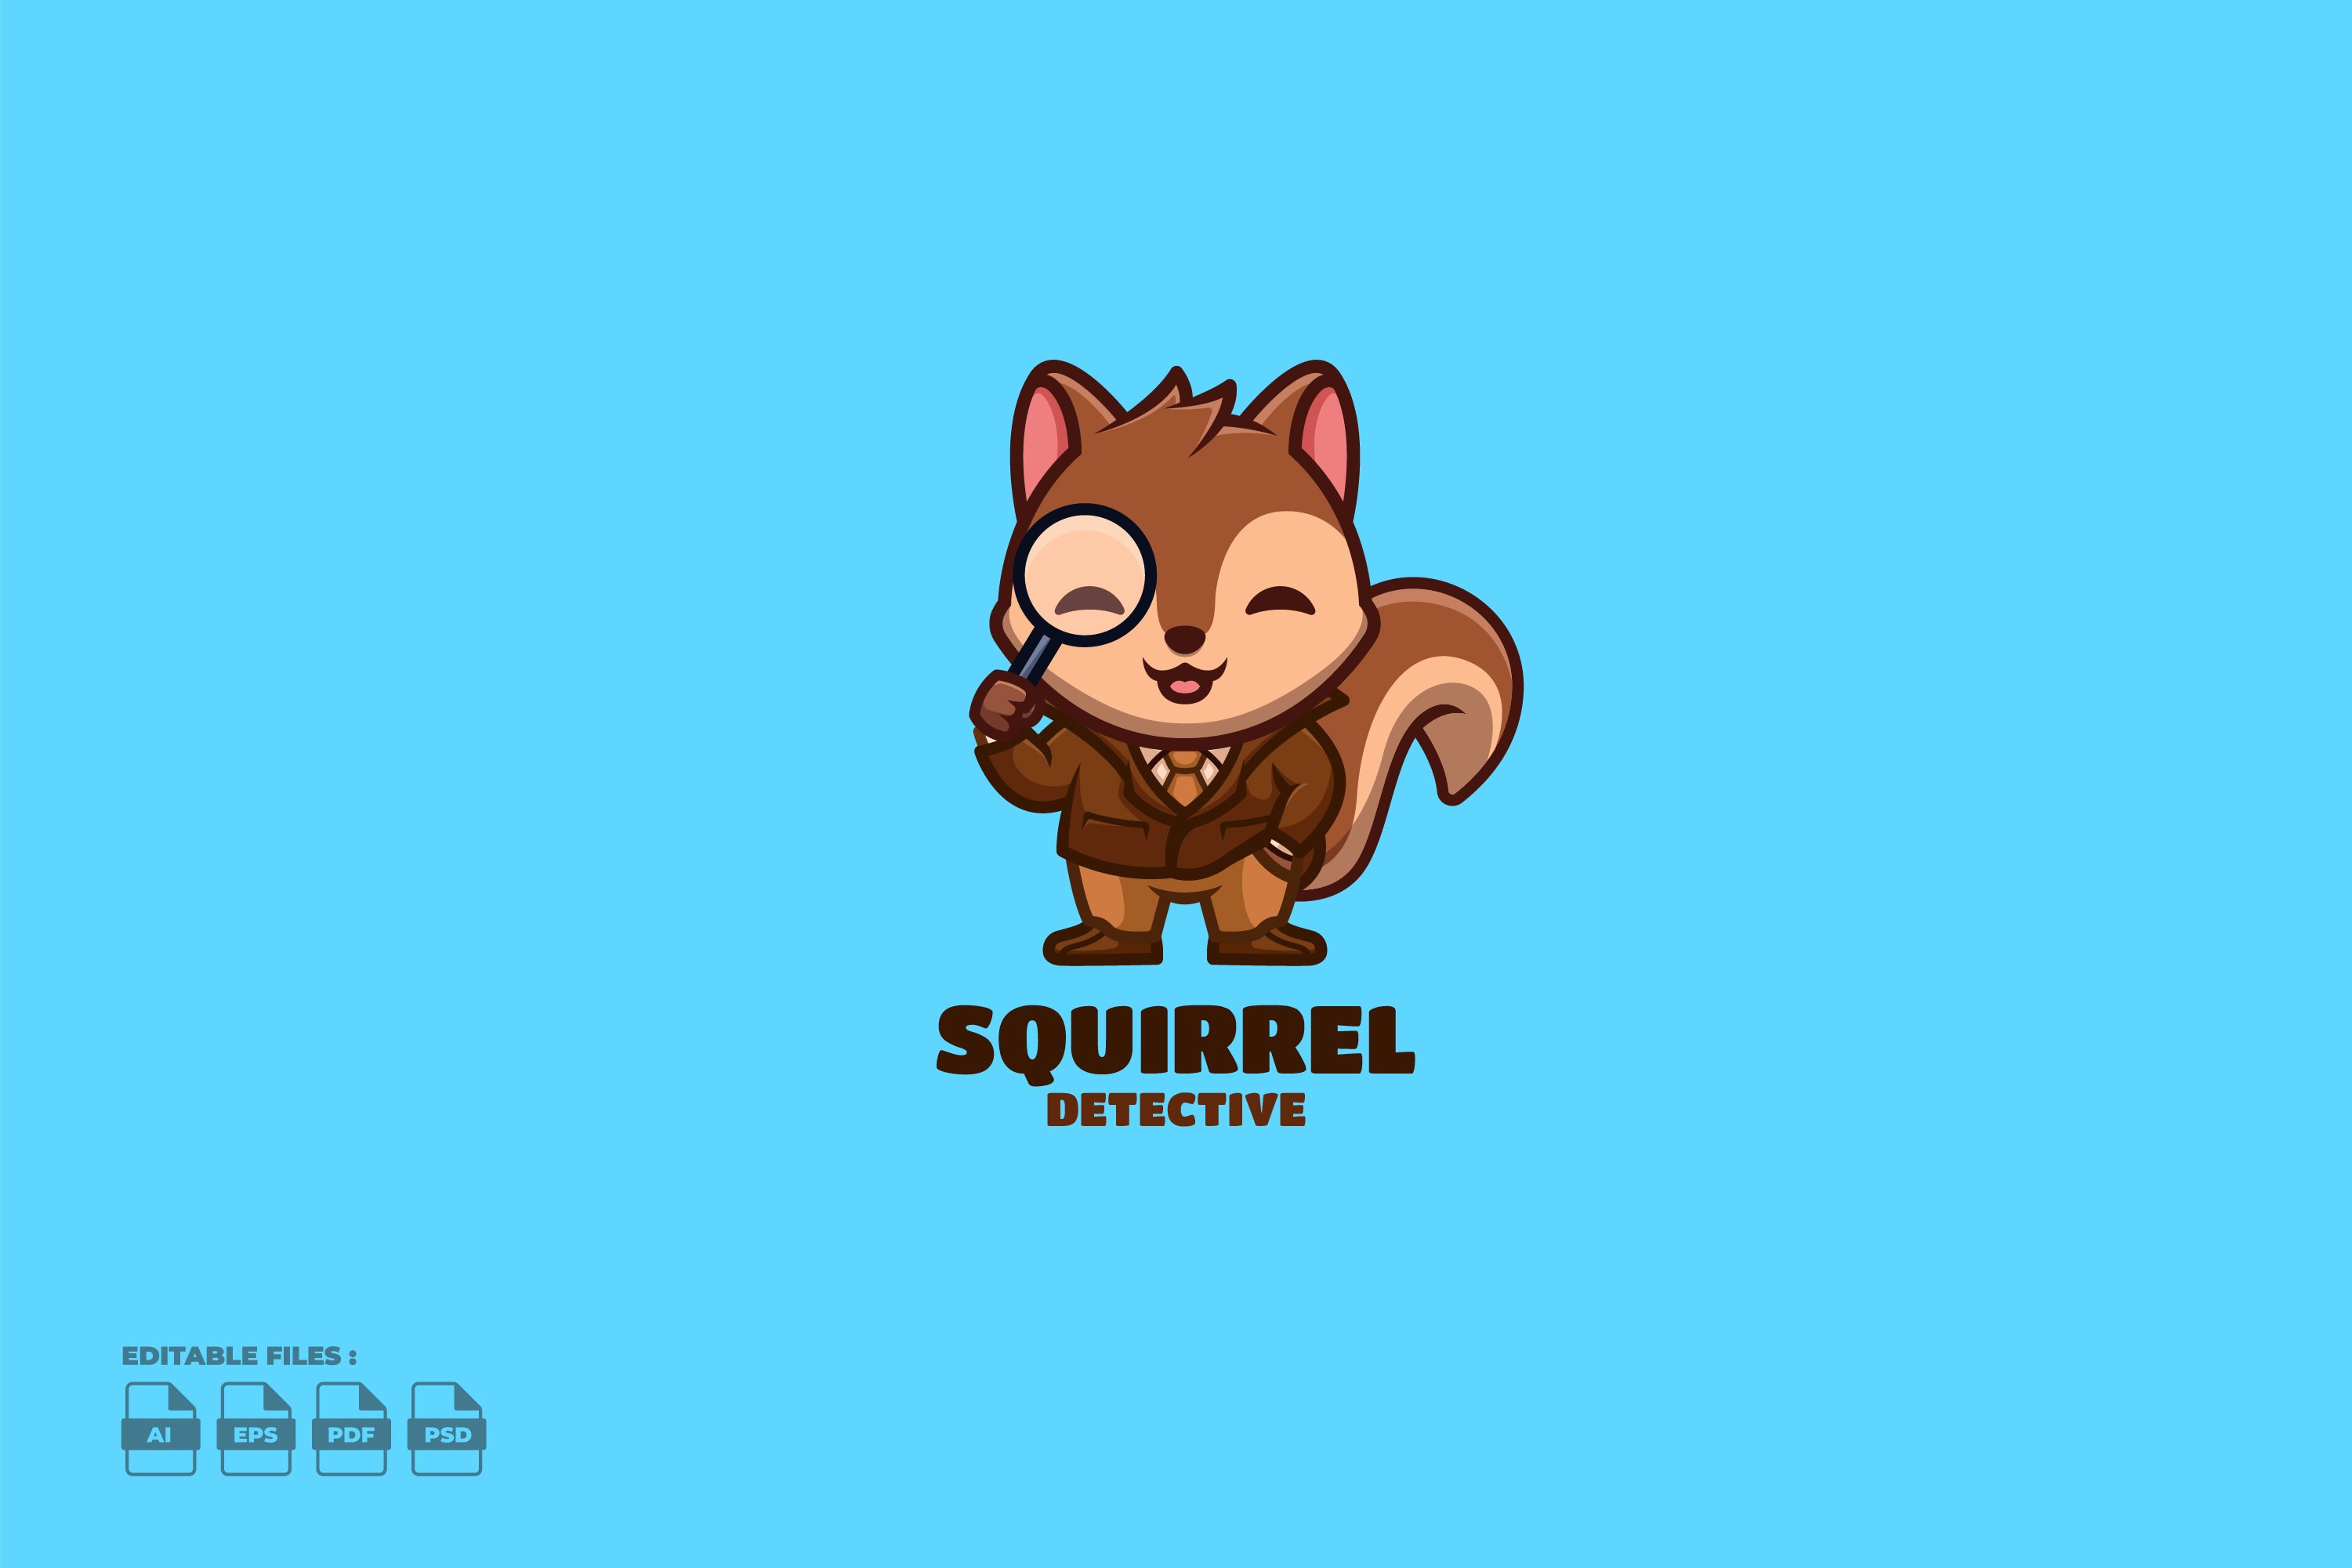 Detective Squirrel Cute Mascot Logo cover image.